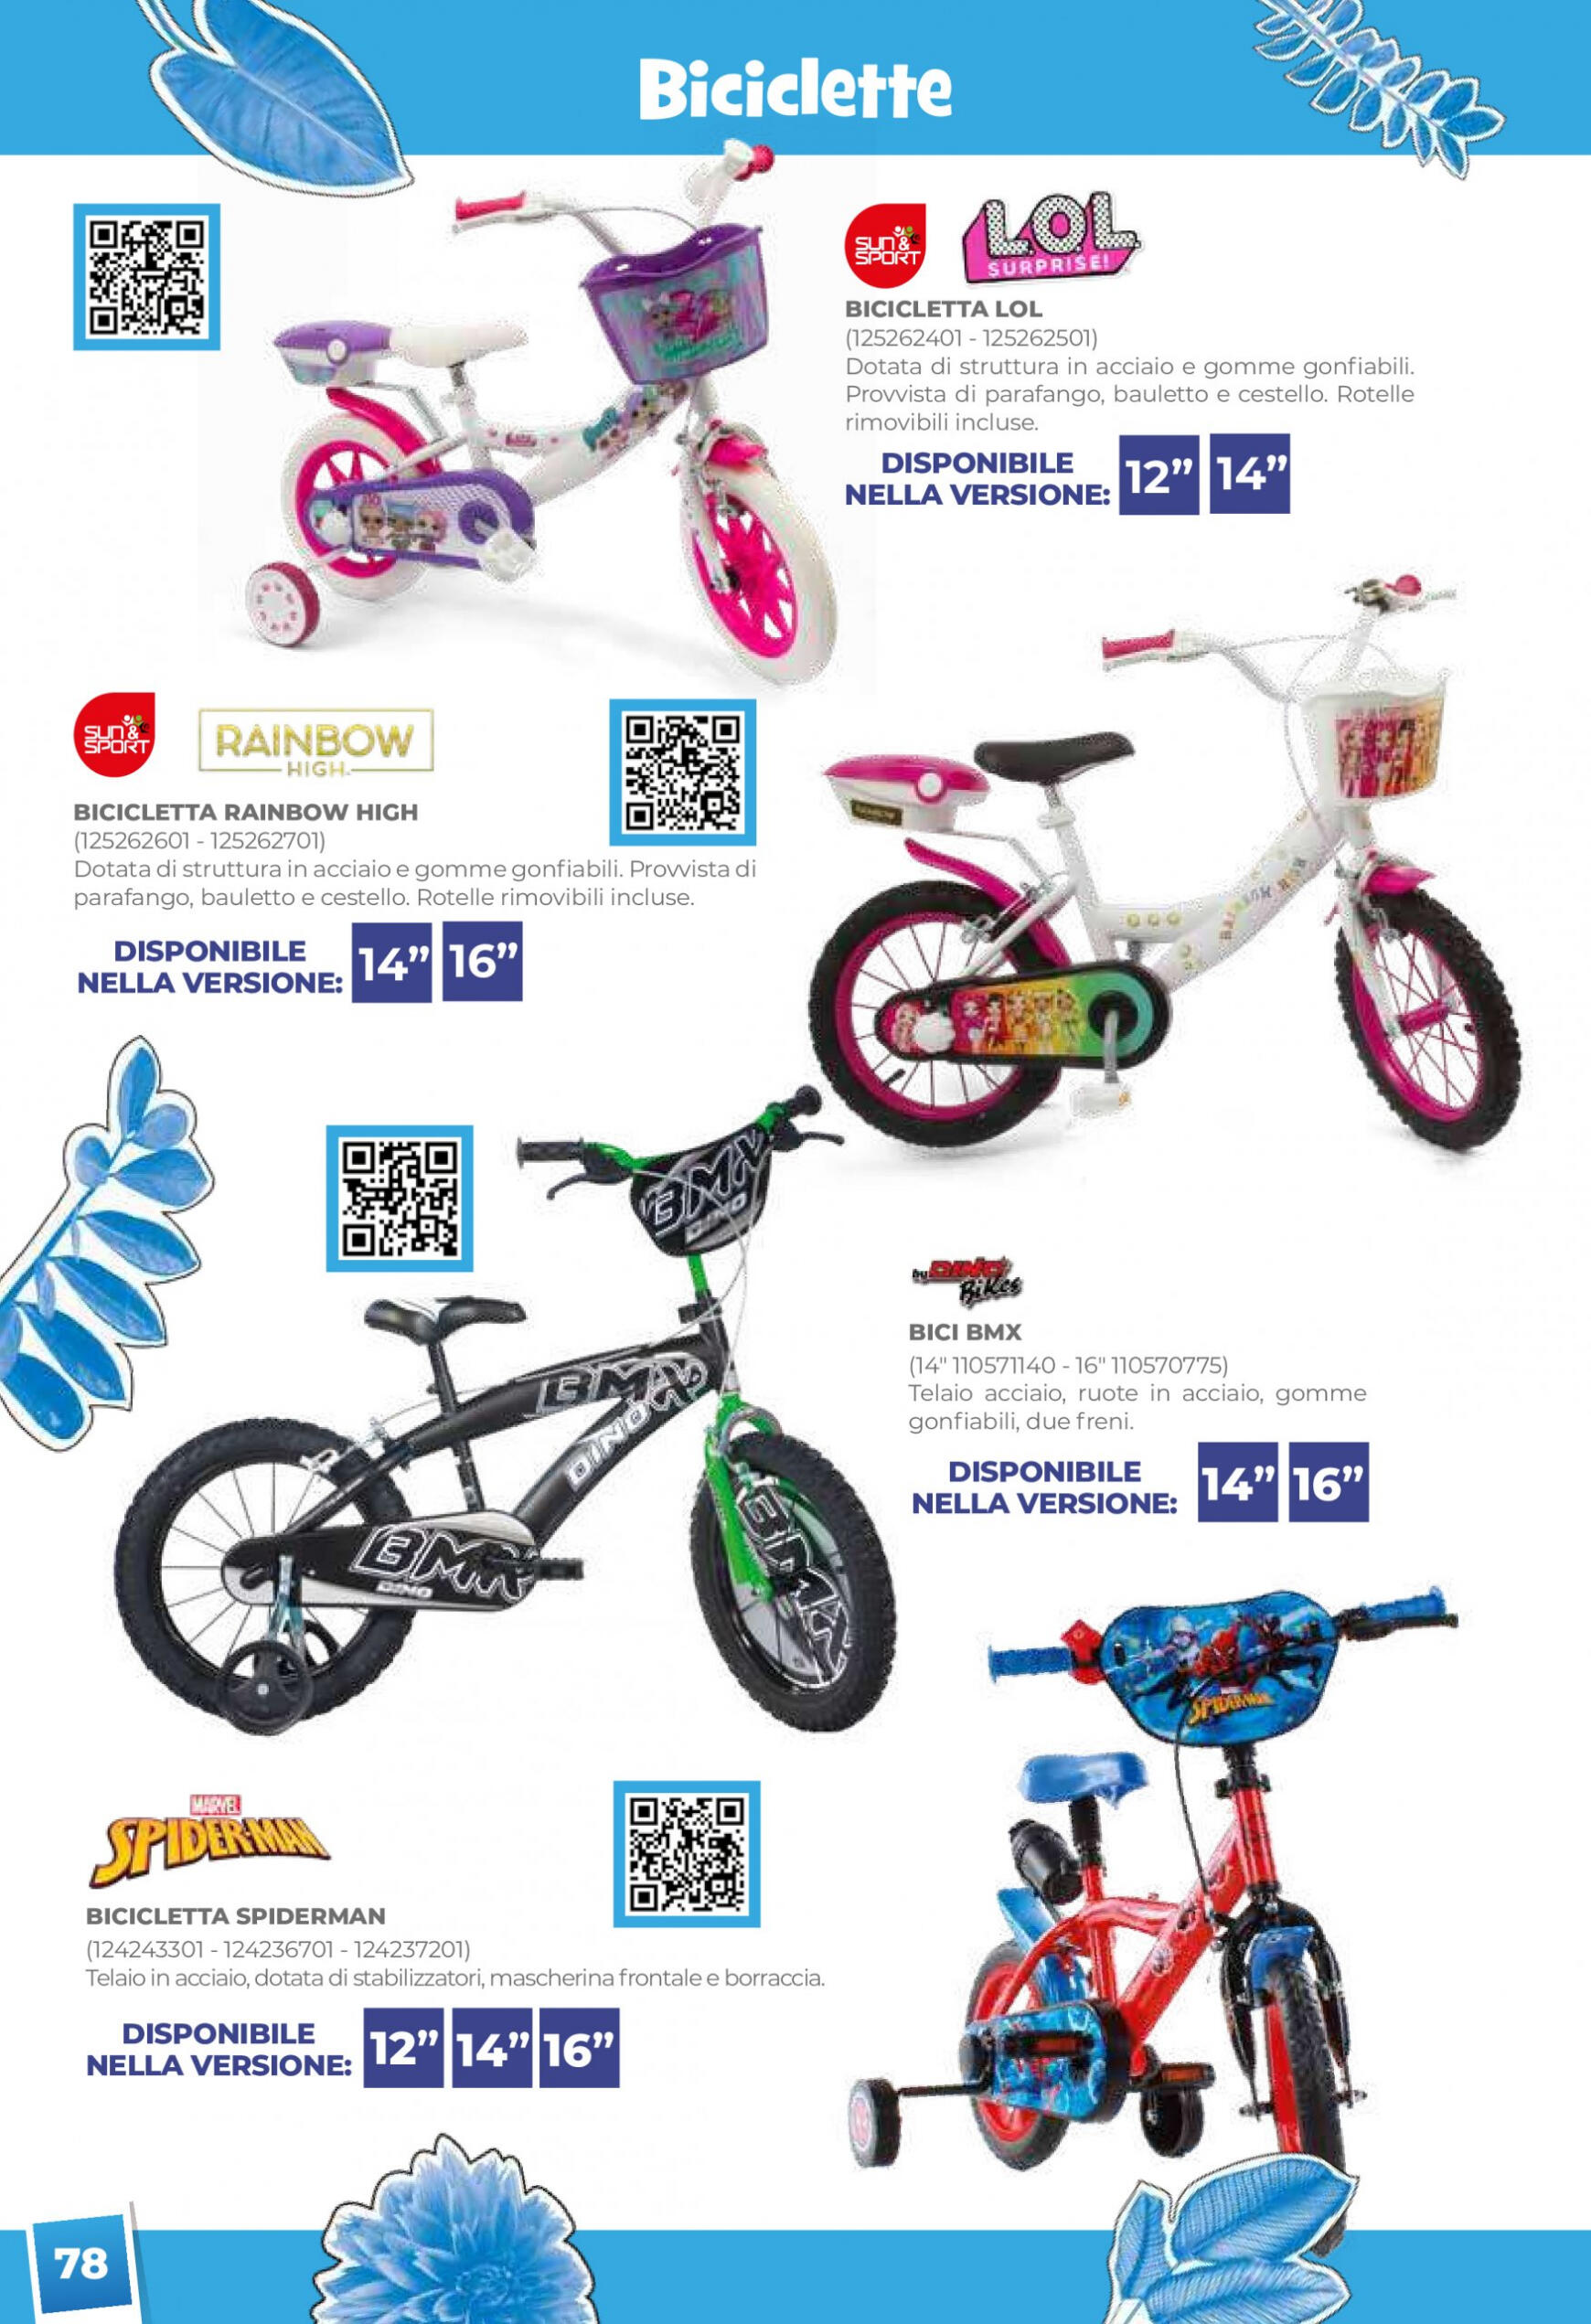 toys-center - Nuovo volantino Toys Center 01.05. - 31.12. - page: 80